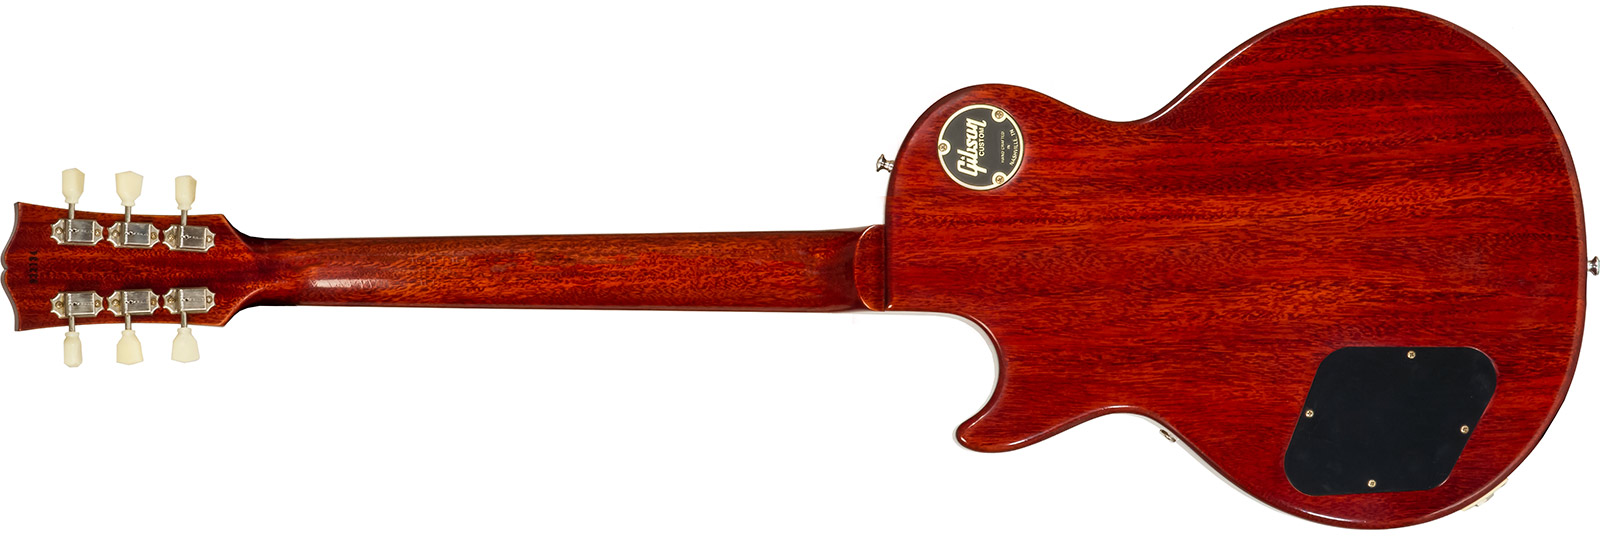 Gibson Custom Shop M2m Les Paul Standard 1959 Reissue 2h Ht Rw #932134 - Murphy Lab Ultra Light Aged Washed Cherry Burst - Single cut electric guitar 